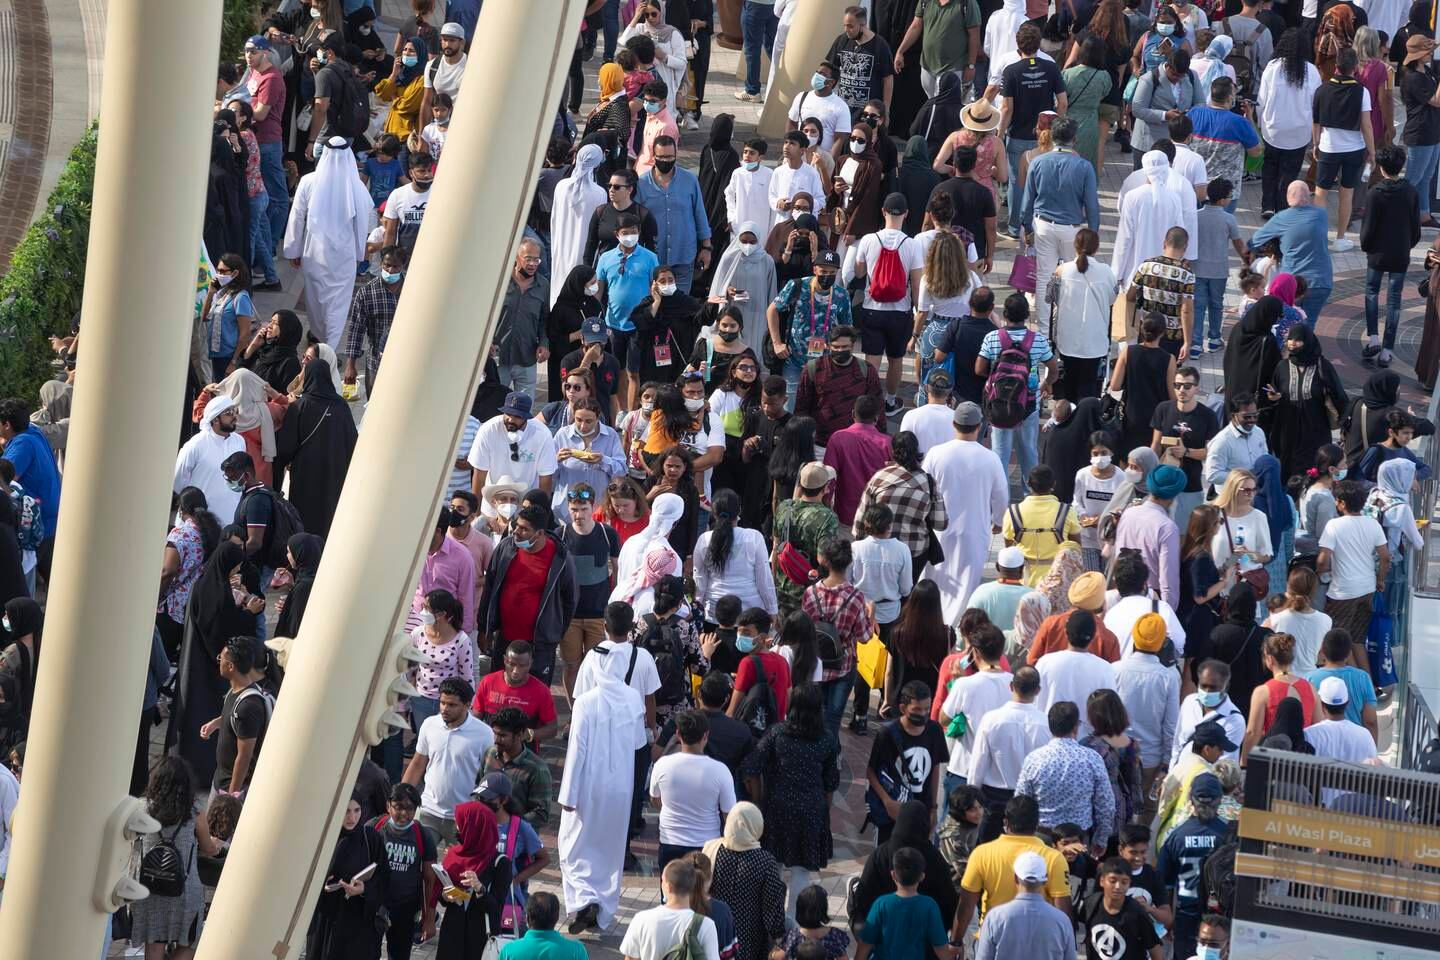 Crowds gather at Expo 2020 Dubai.
Antonie Robertson / The National